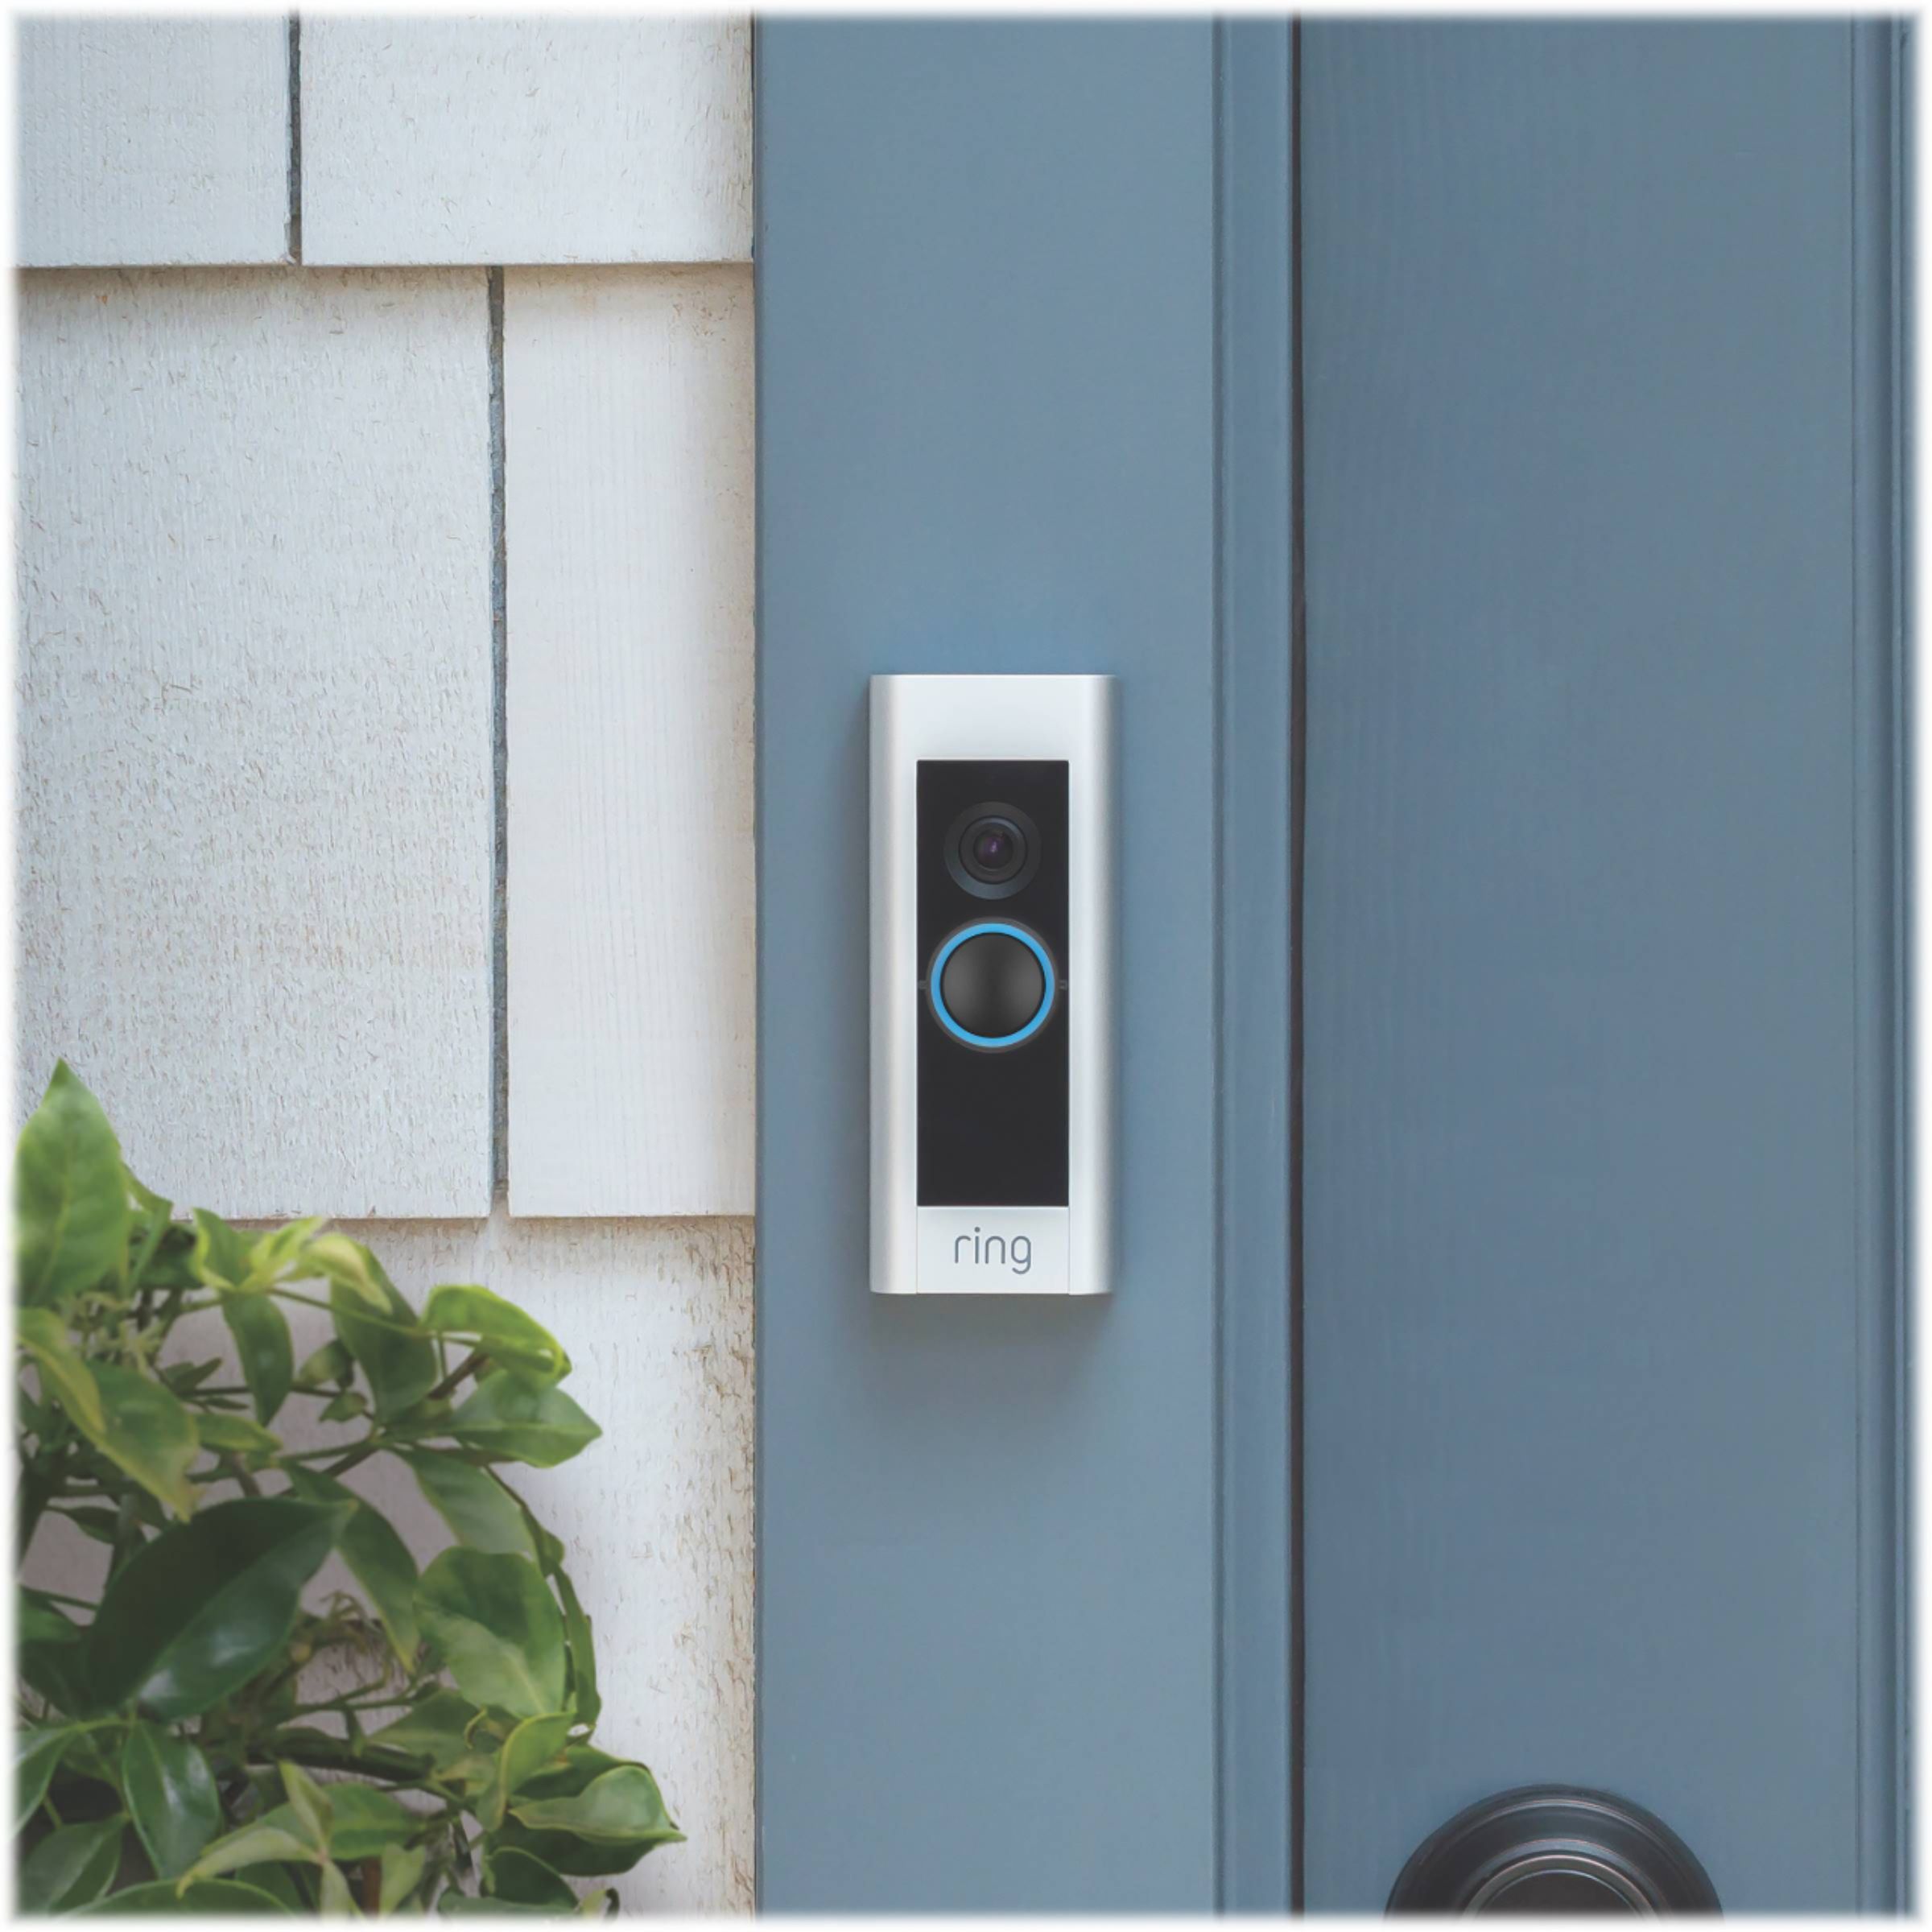 Ring Video Doorbell Pro Satin Nickel Includes 4 Faceplates 8VR1P6-0EN0 